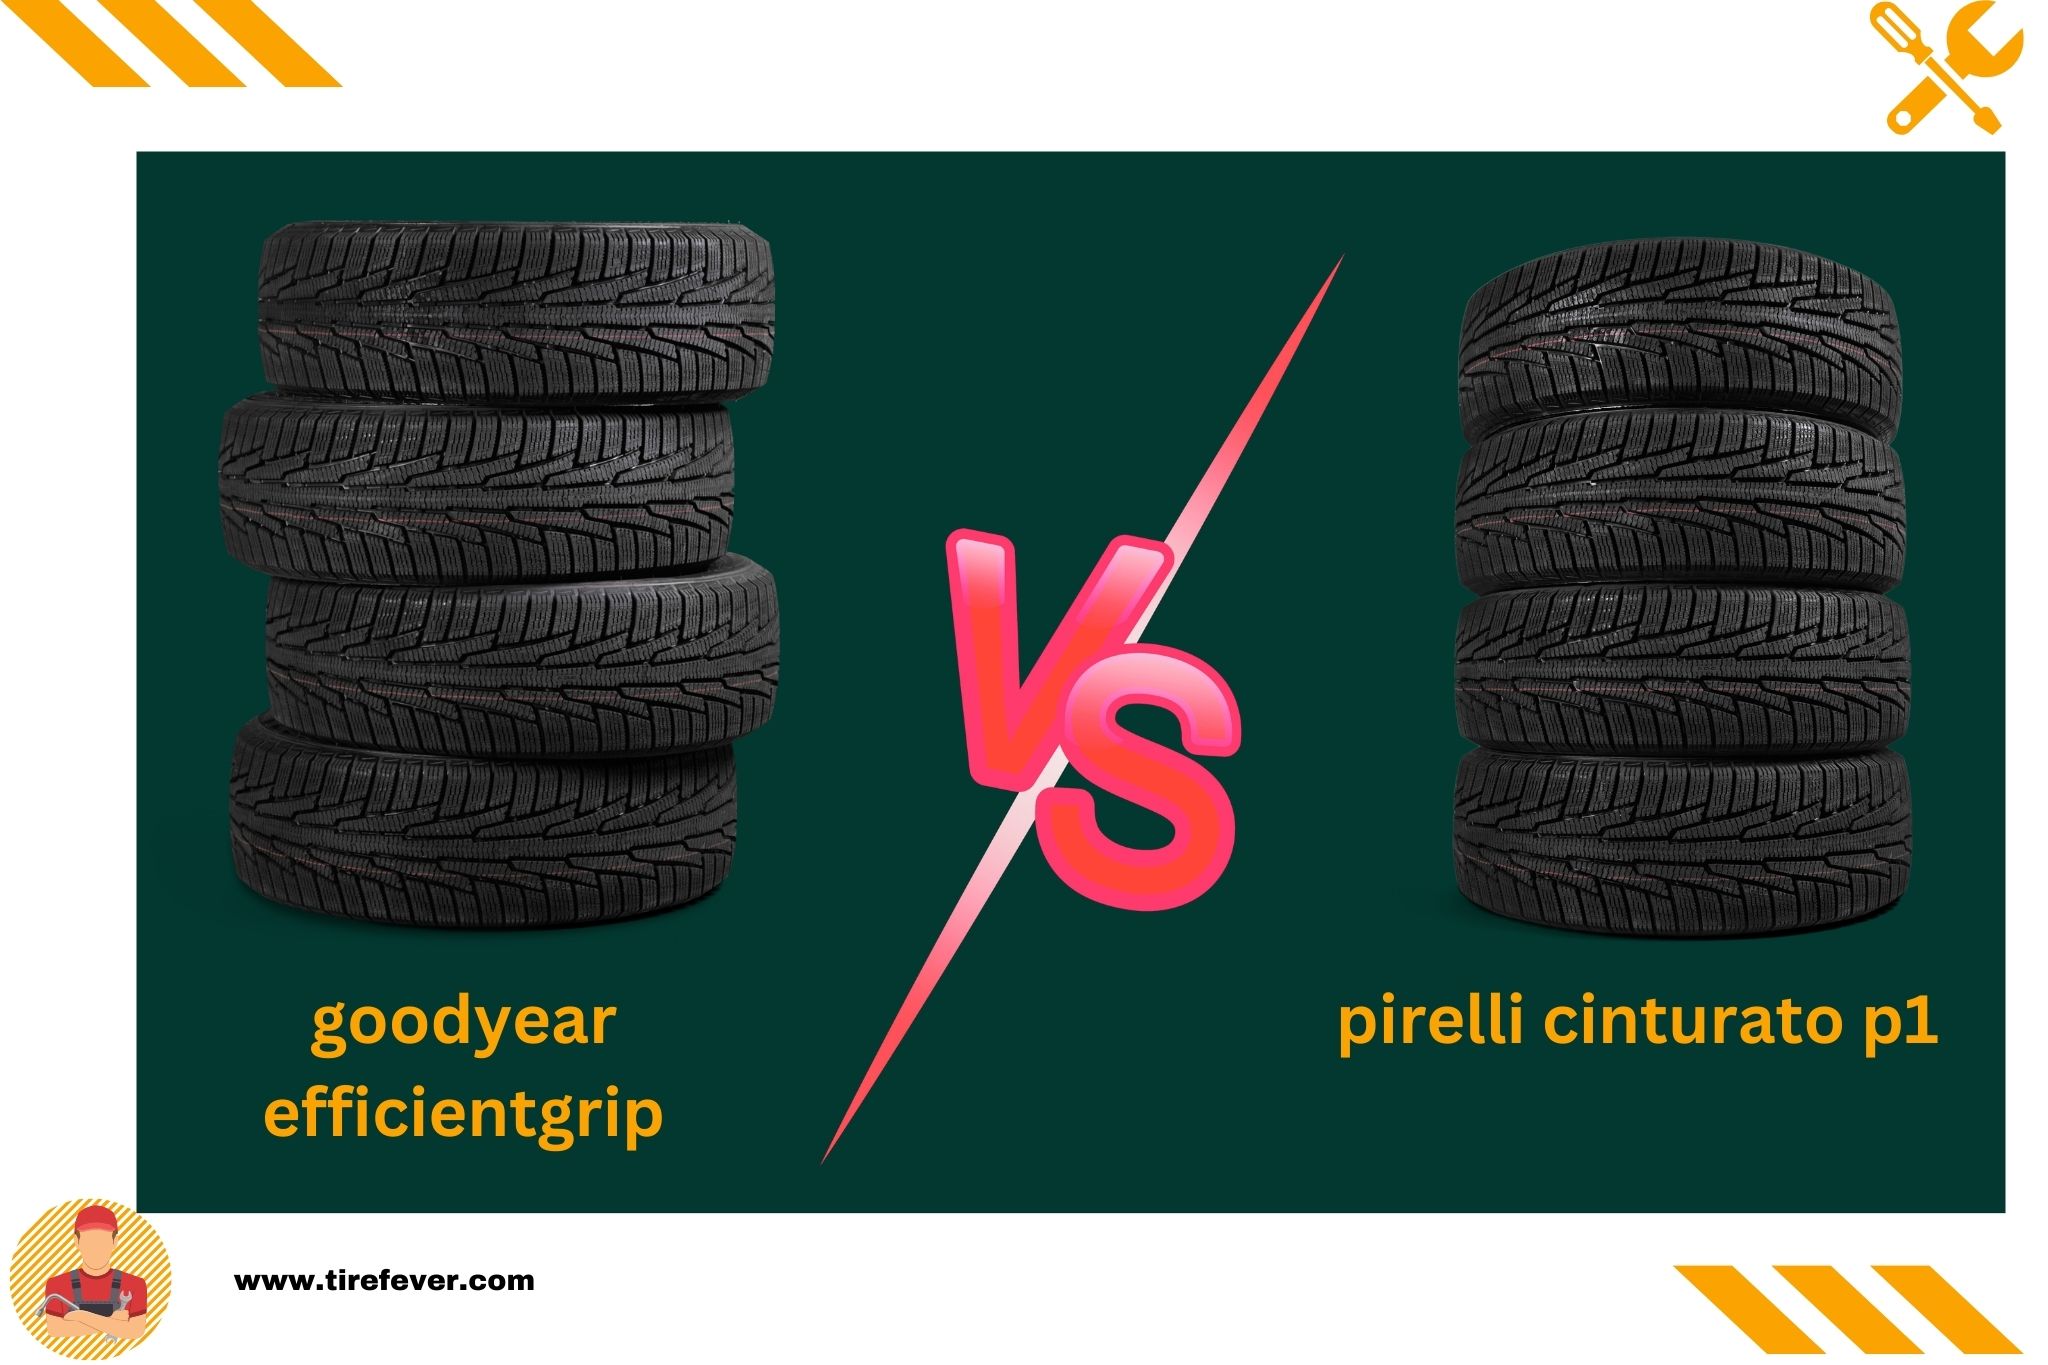 goodyear efficientgrip vs pirelli cinturato p1